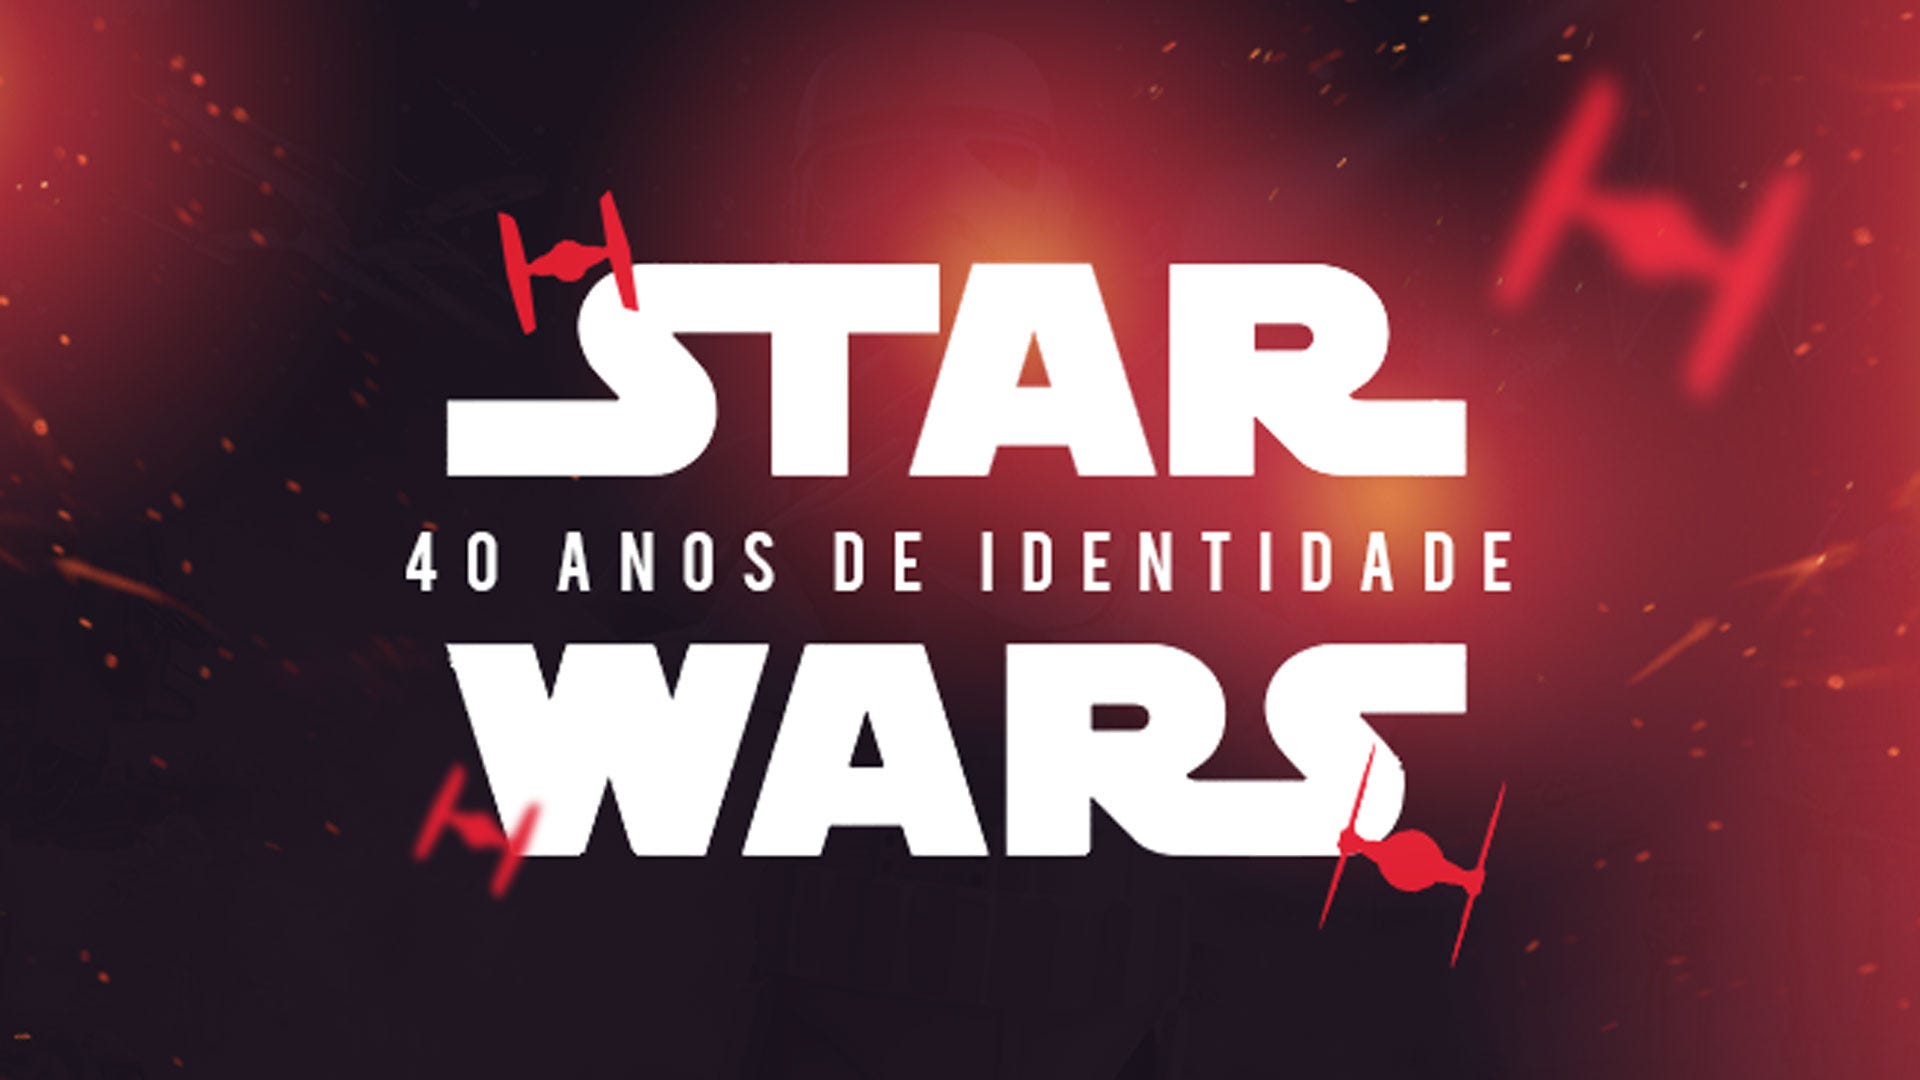 Bilheterias Brasil: Star Wars - O Despertar da Força tem a